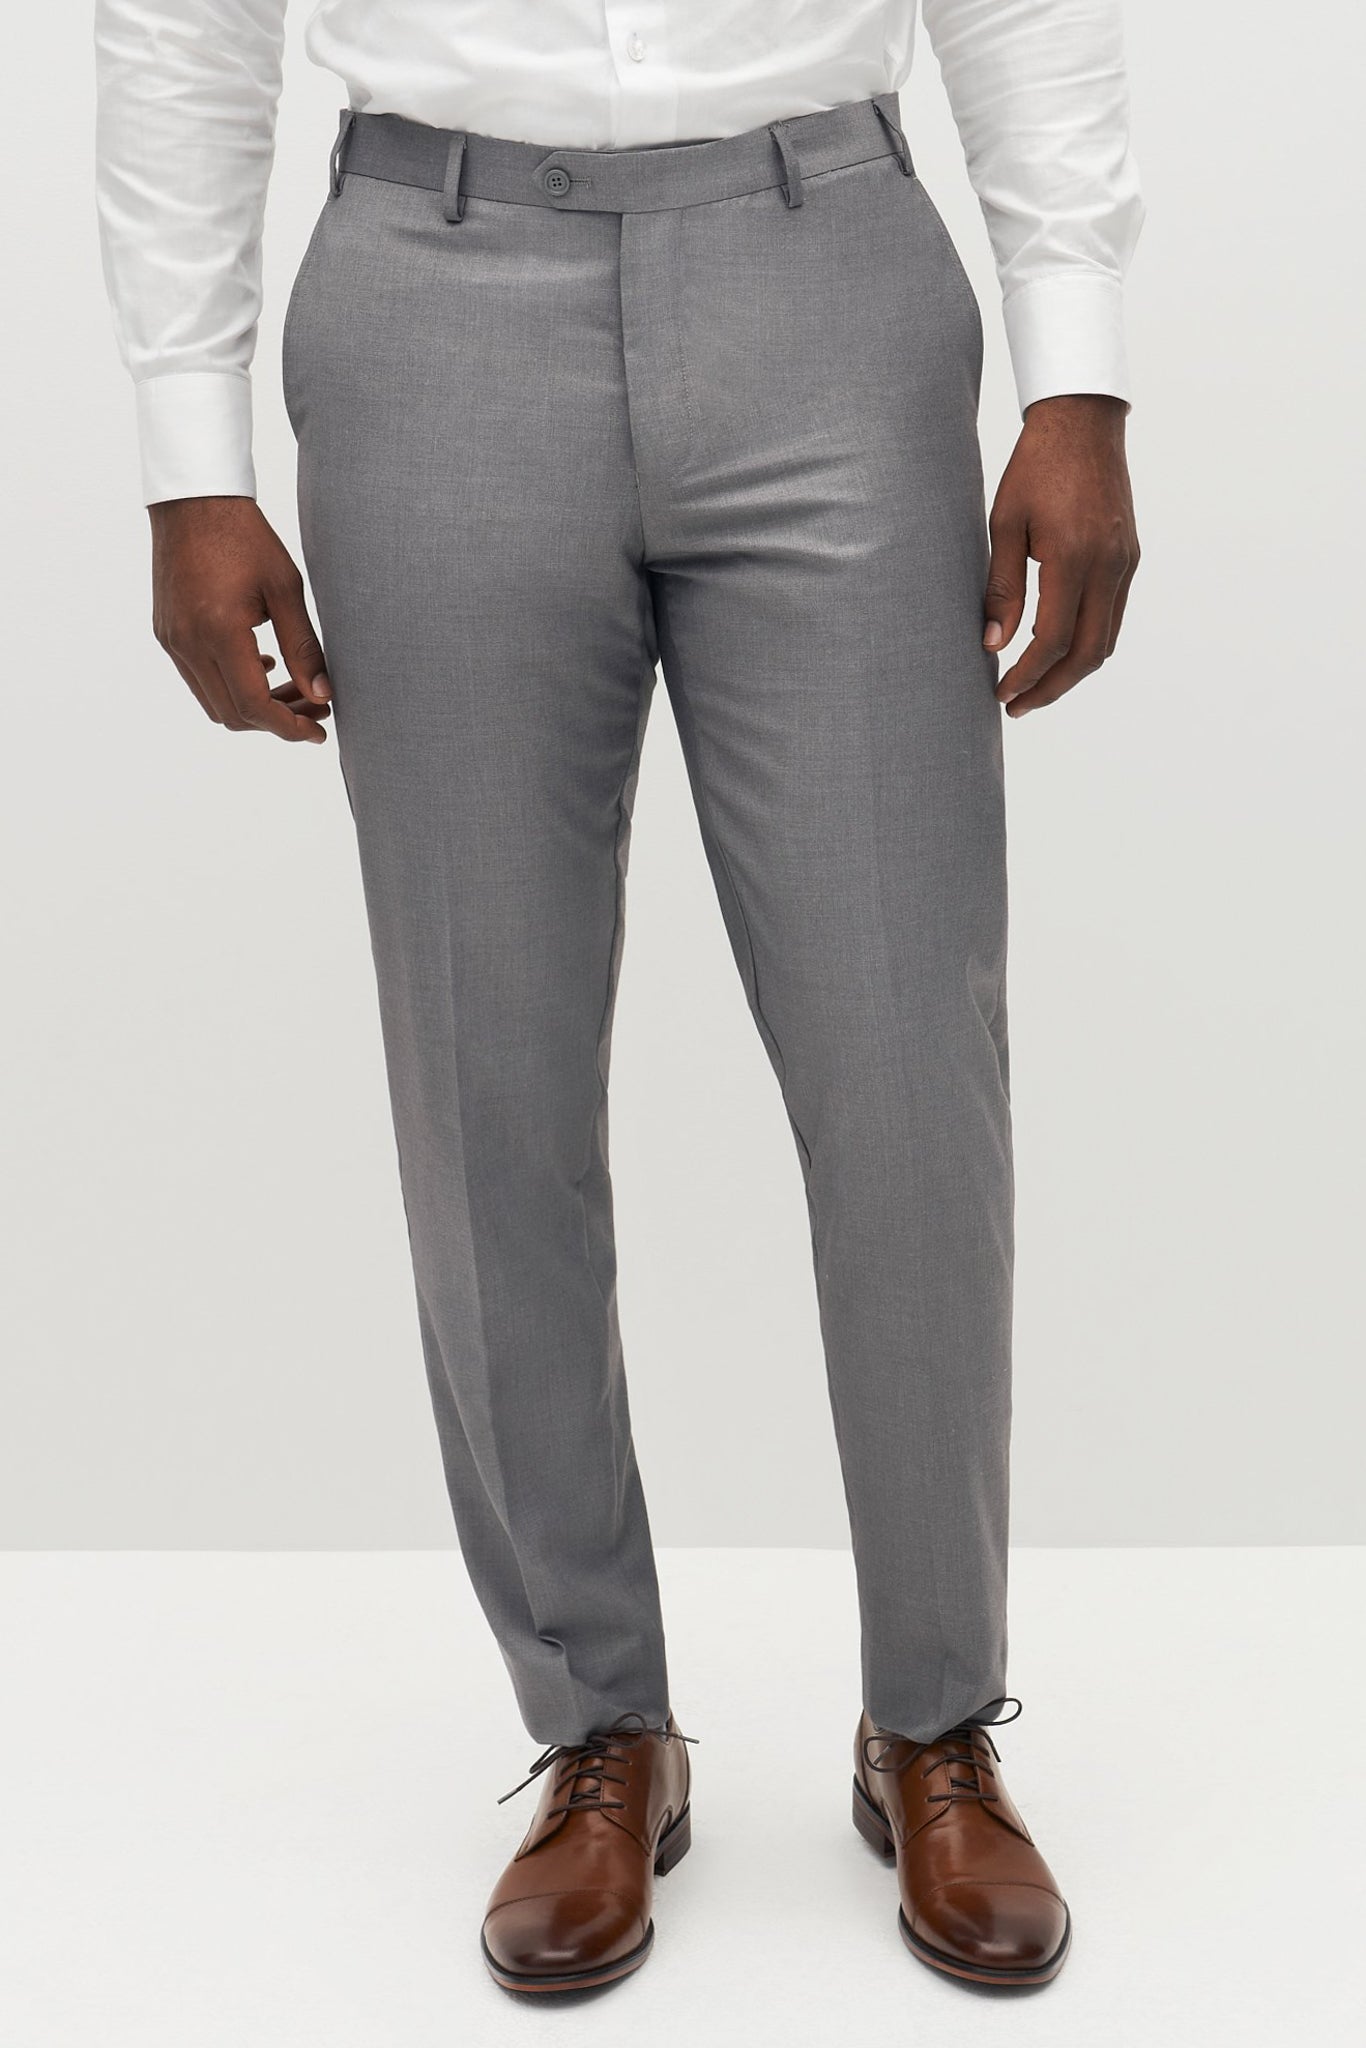 Buy C3 Silver Coloured Formal Trouser Pants for Men 40 at Amazonin